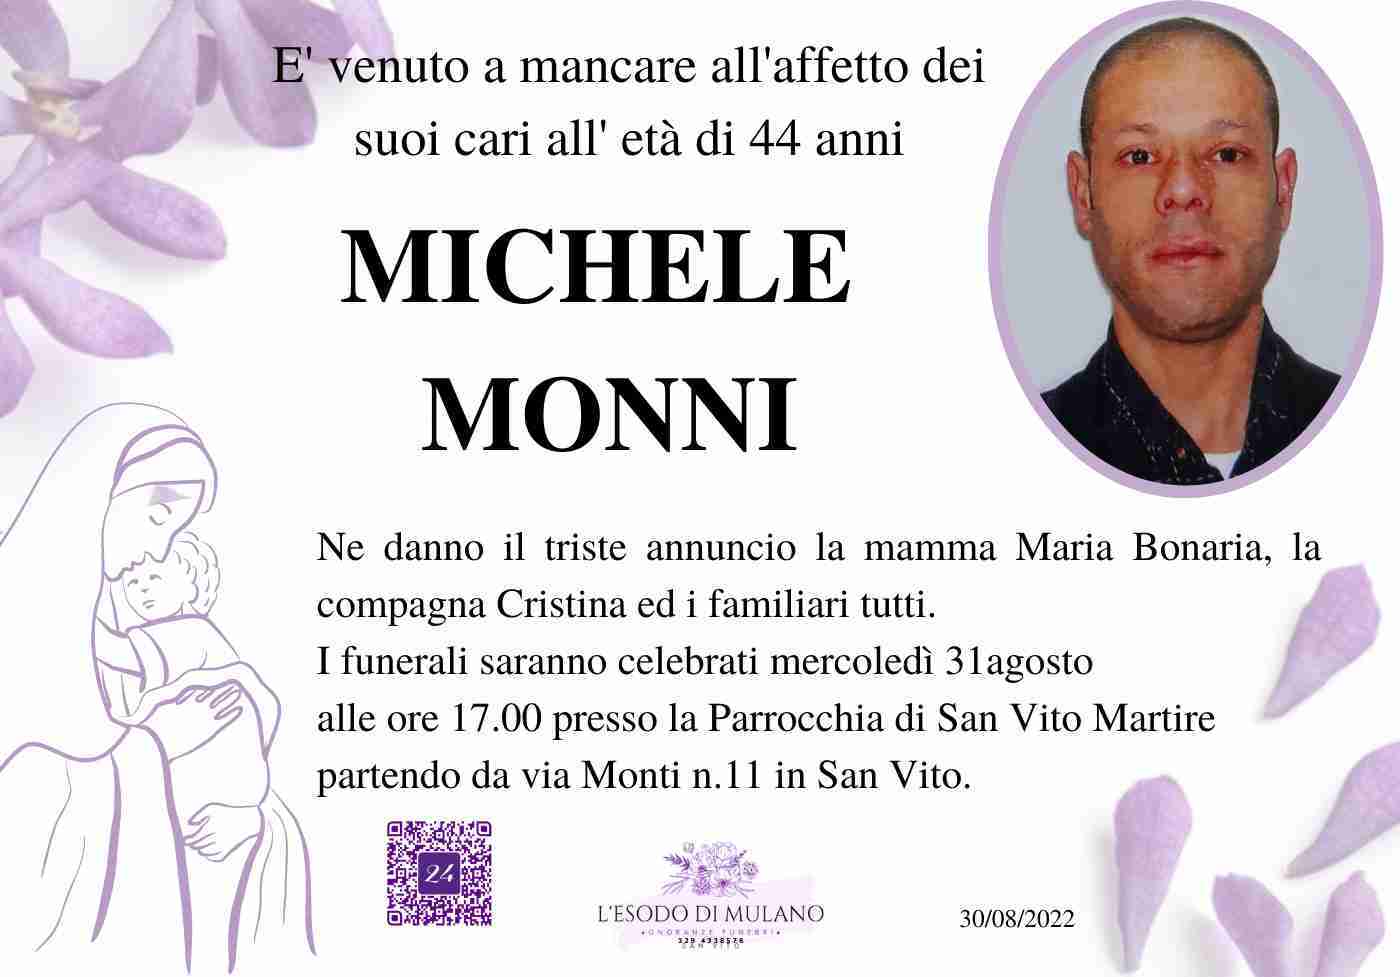 Michele Monni